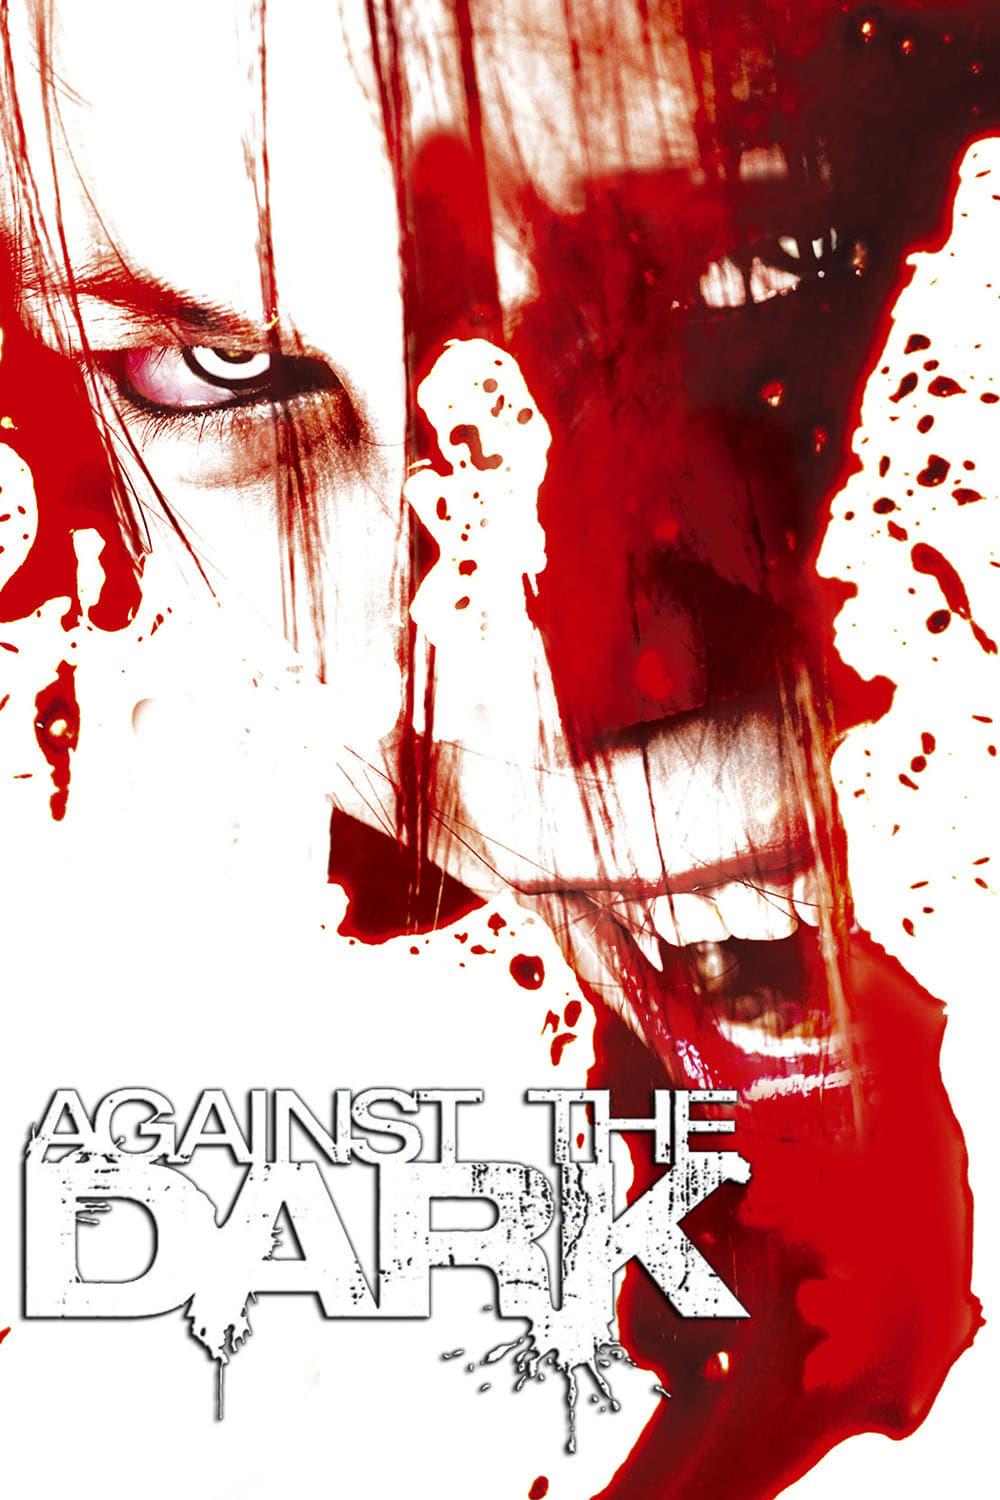 Against the Dark poster